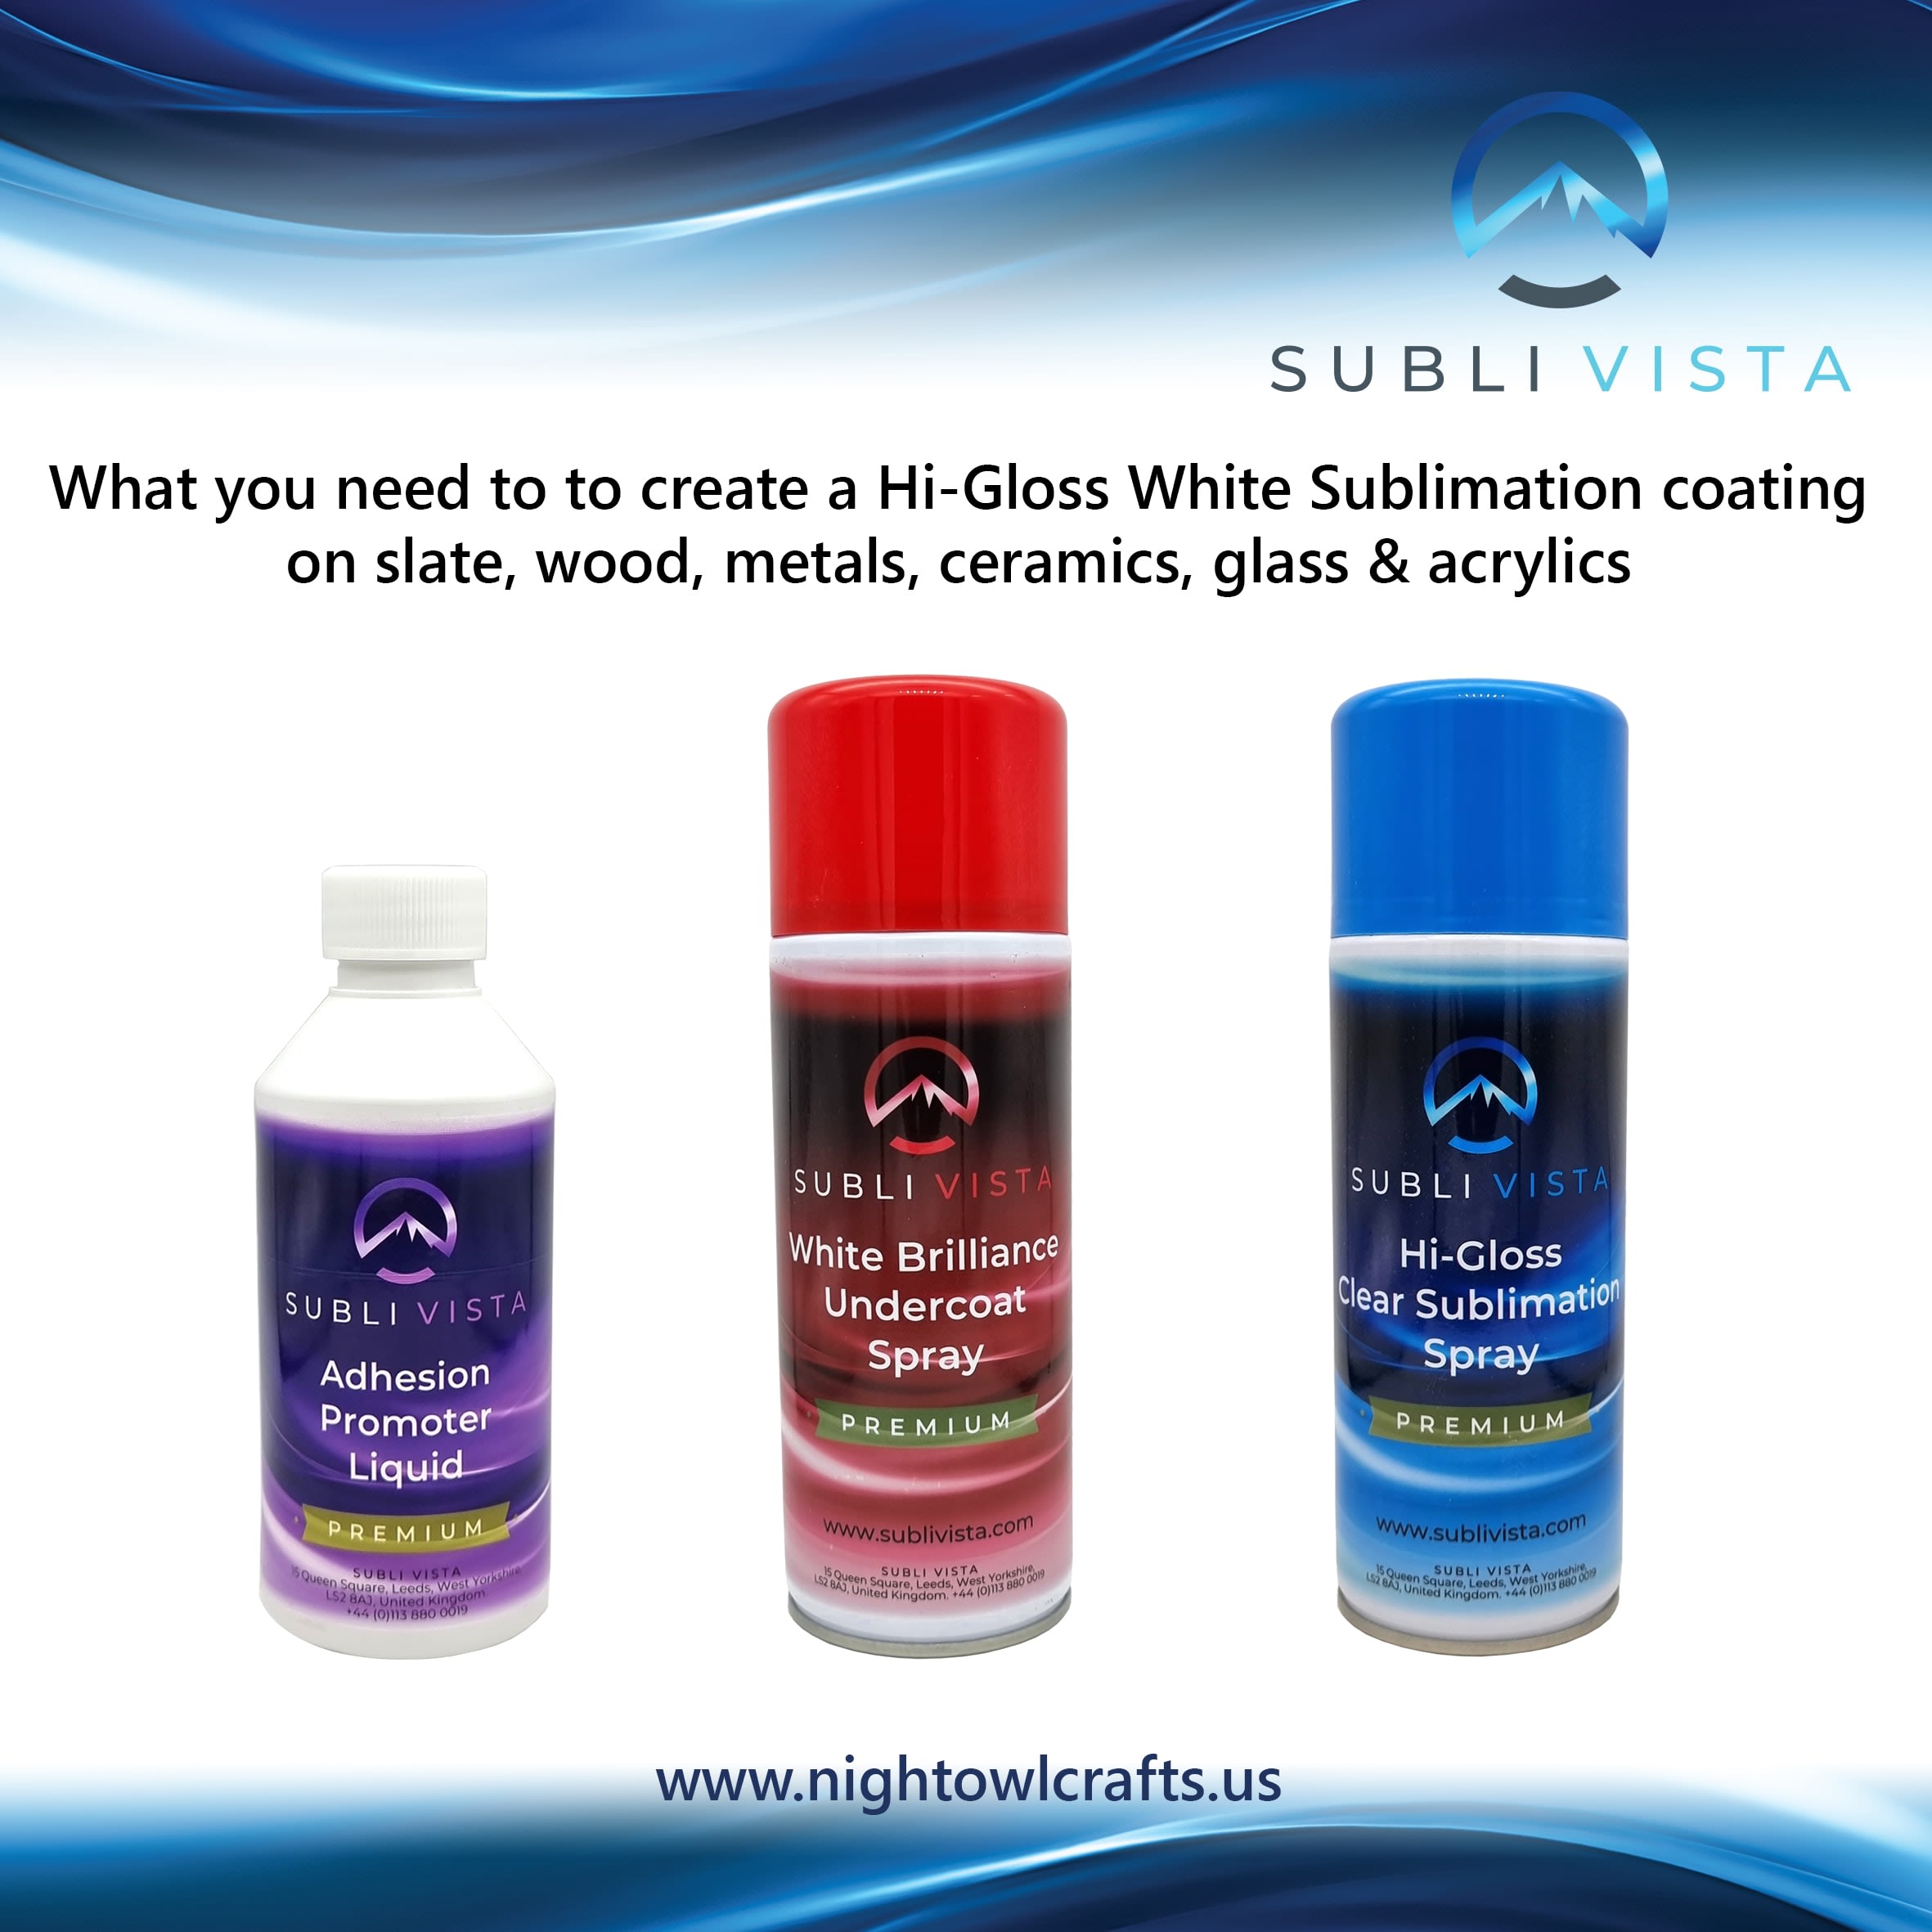 Subli Vista Hi-Gloss Clear Sublimation Spray 400ml - Subli Vista